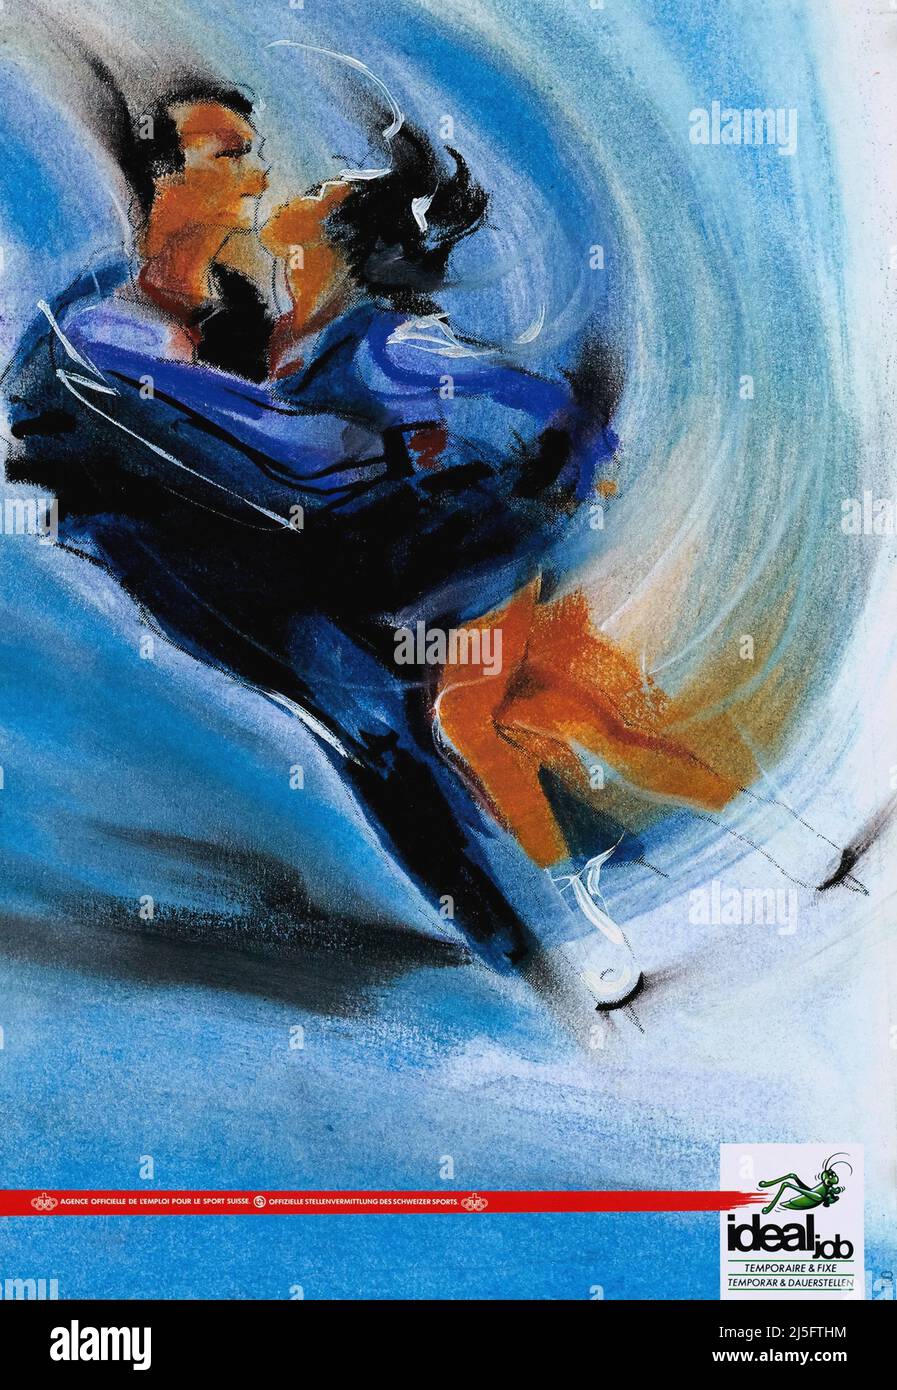 Vintage Ice Skating Poster - Switzerland Stock Photo